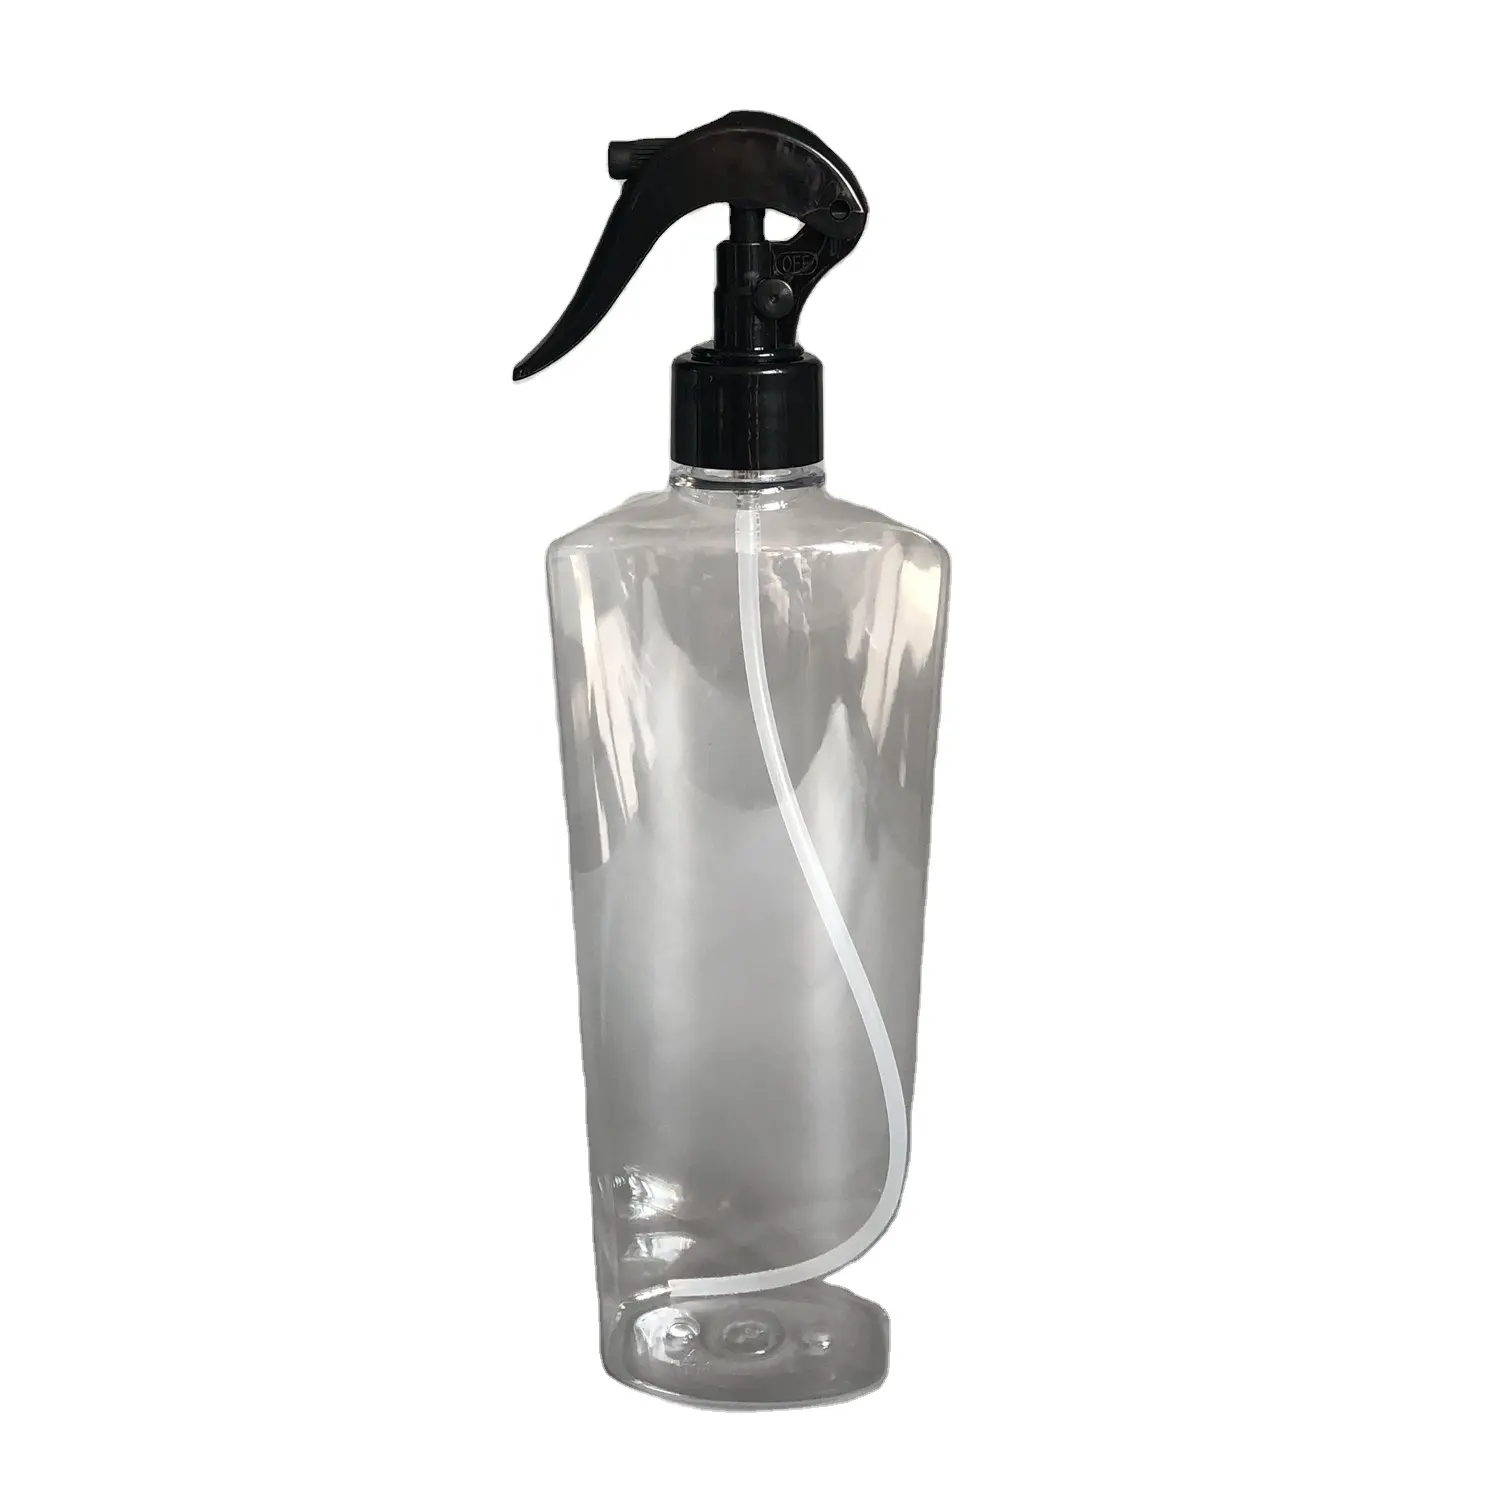 16 Oz Plastic Bottles Adjustable Spray Bottles For Cleaning Solutions - No Leak And Clog